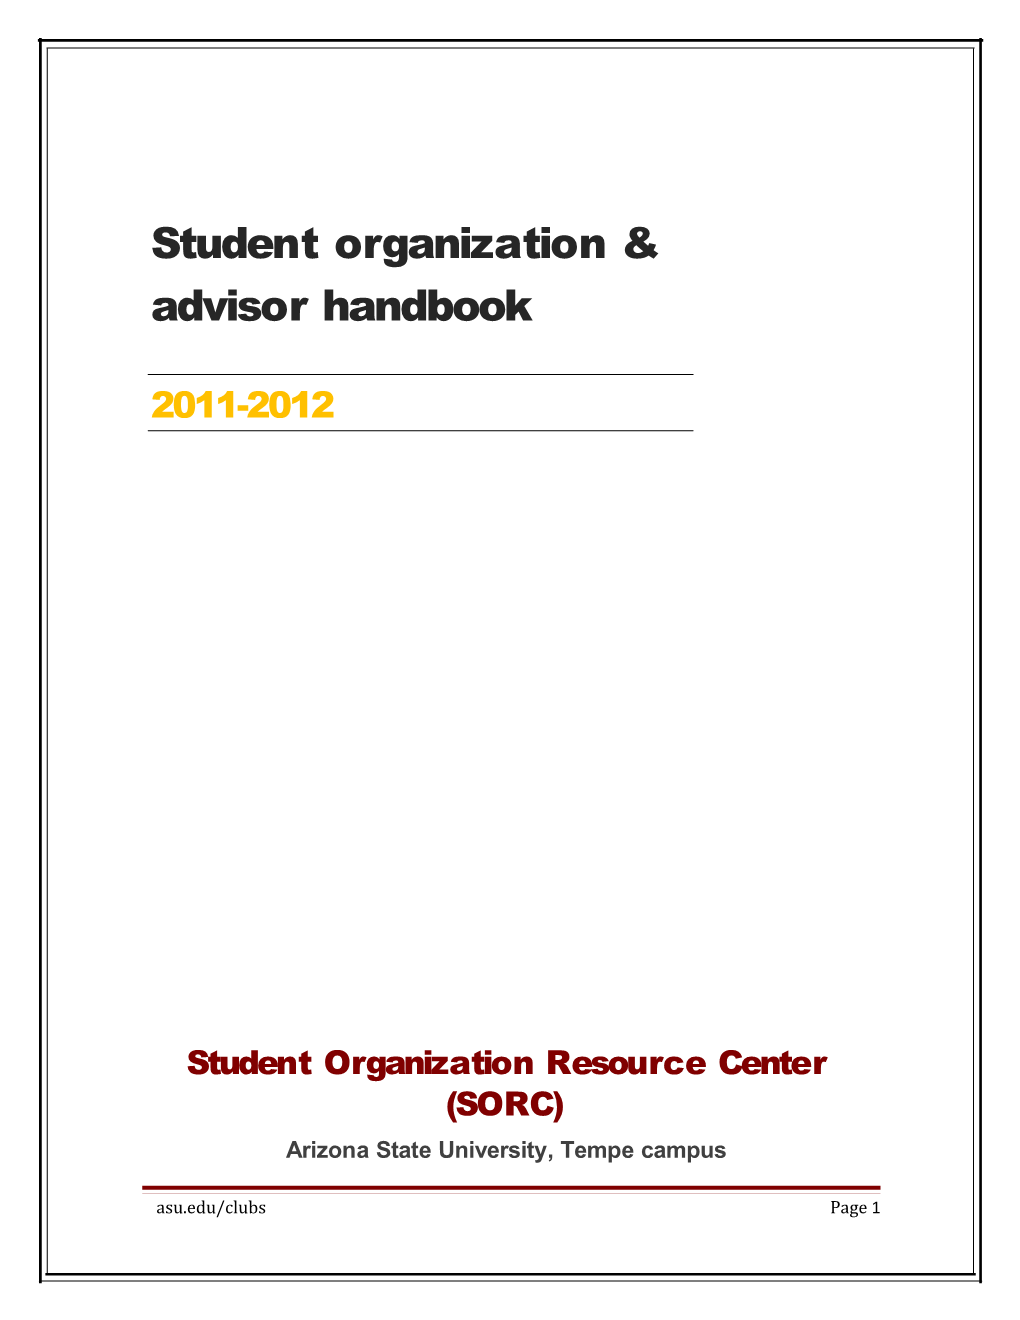 Student Organization Resource Center (SORC)